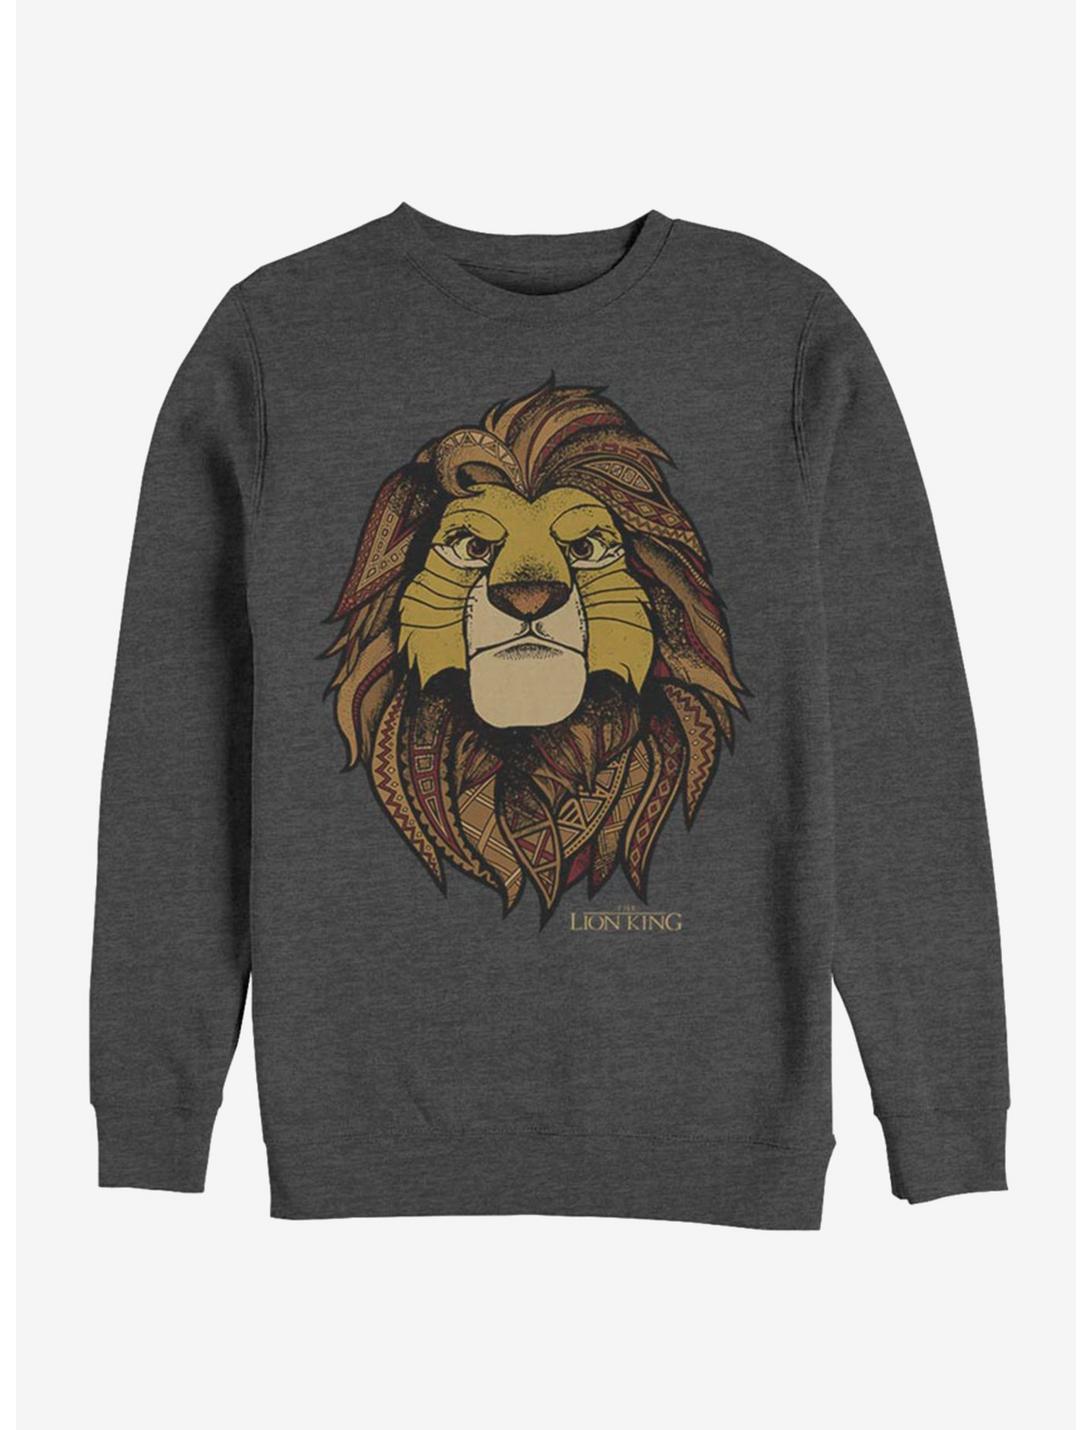 Disney The Lion King Africa Sweatshirt, CHAR HTR, hi-res